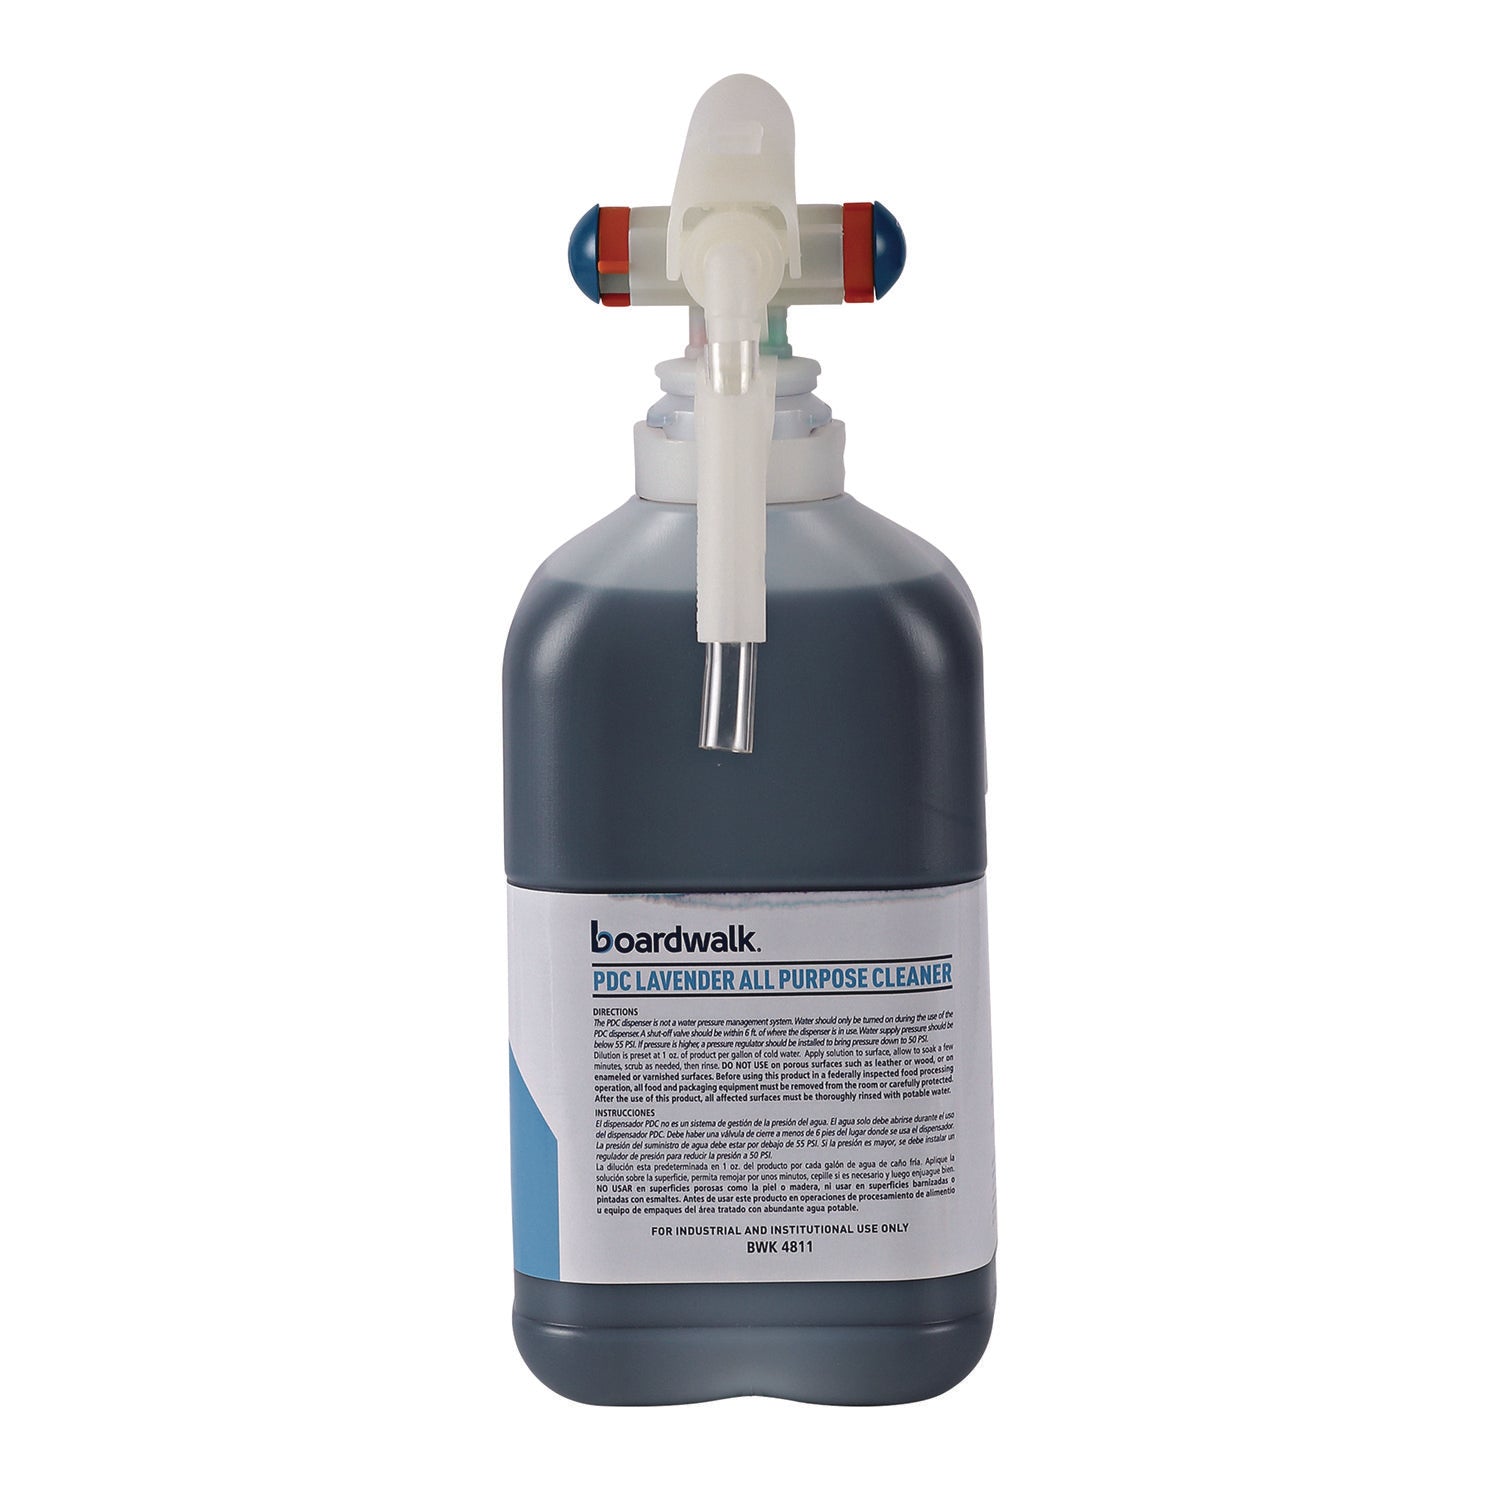 pdc-all-purpose-cleaner-lavender-scent-3-liter-bottle-2-carton_bwk4811 - 6